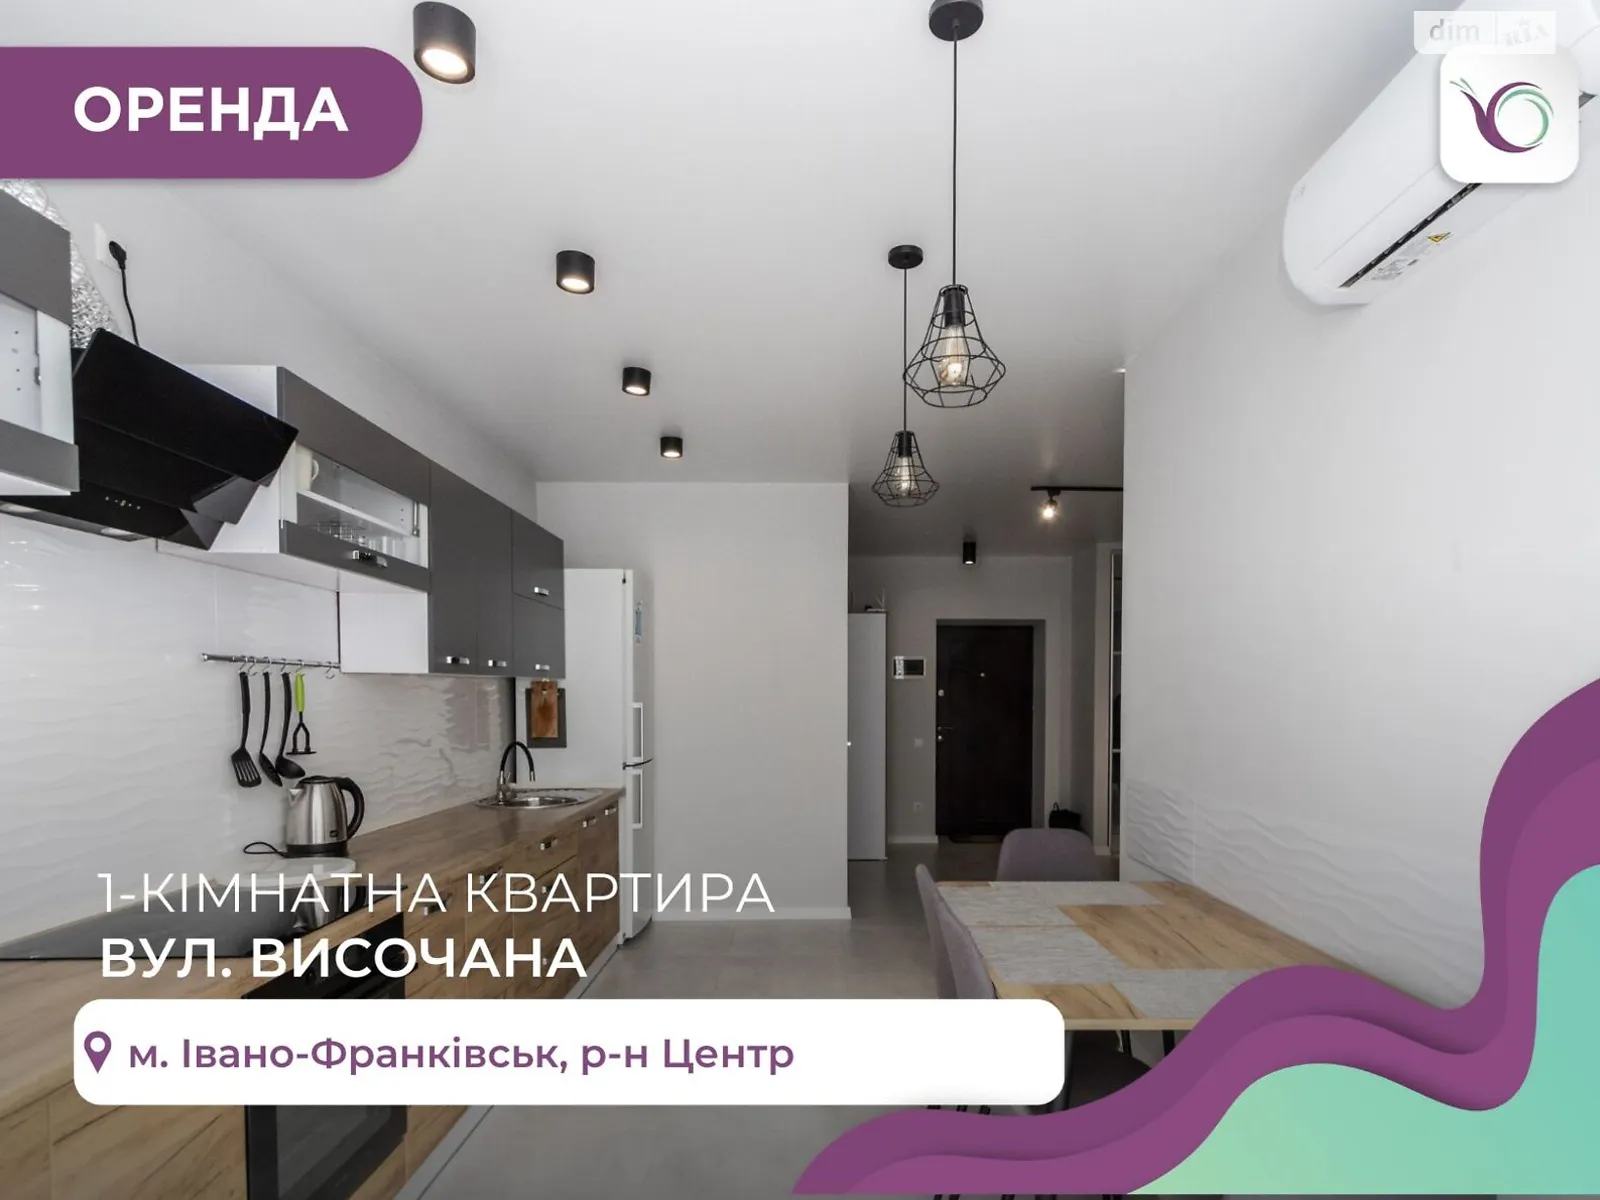 Сдается в аренду 1-комнатная квартира 46 кв. м в Ивано-Франковске, ул. Высочана Семена - фото 1